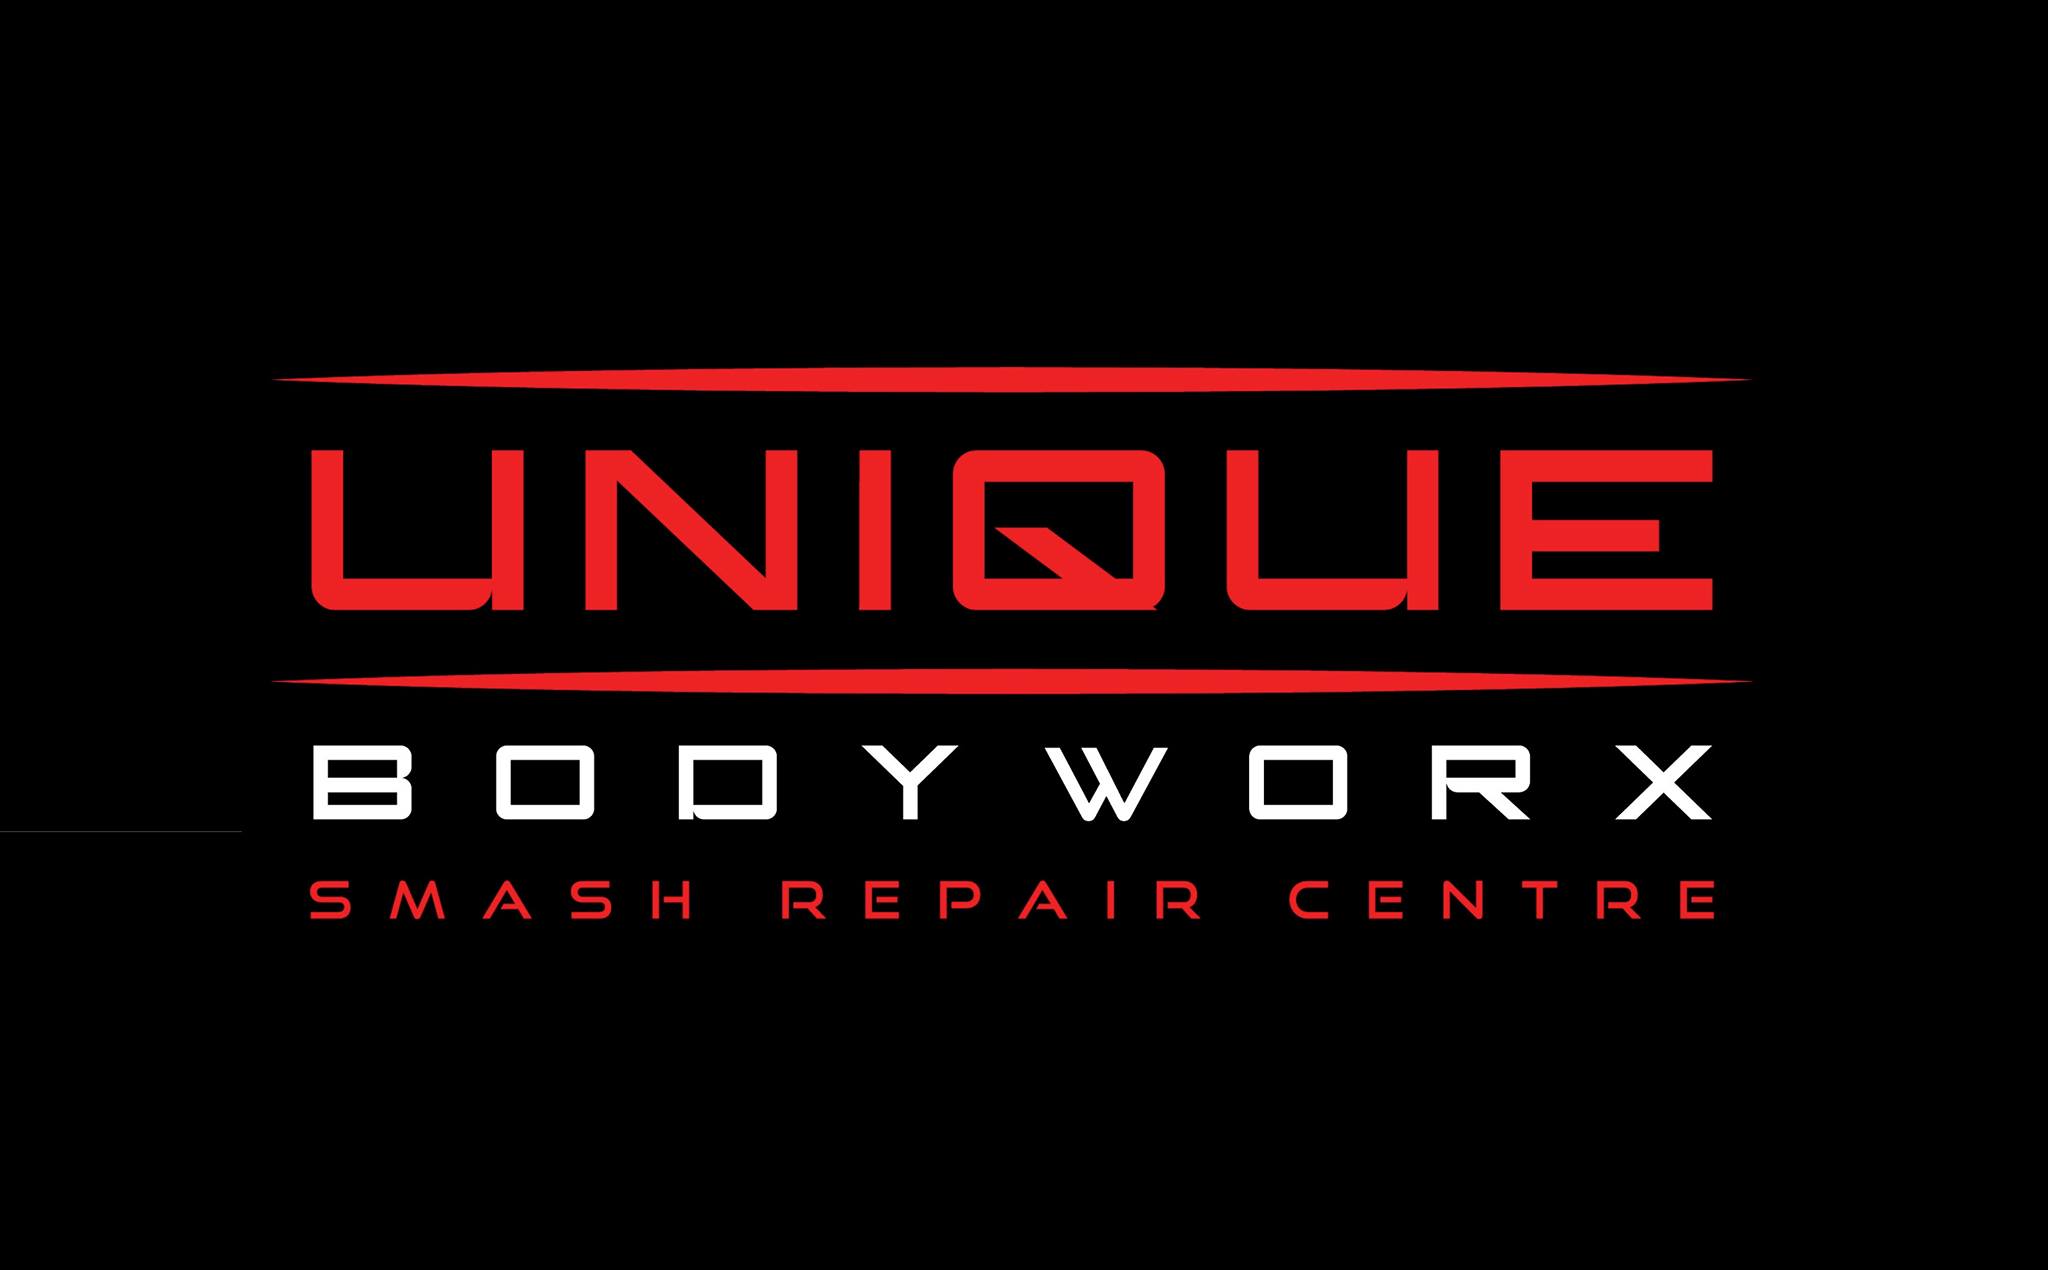 Unique Bodyworx Smash Repair Centre Photos